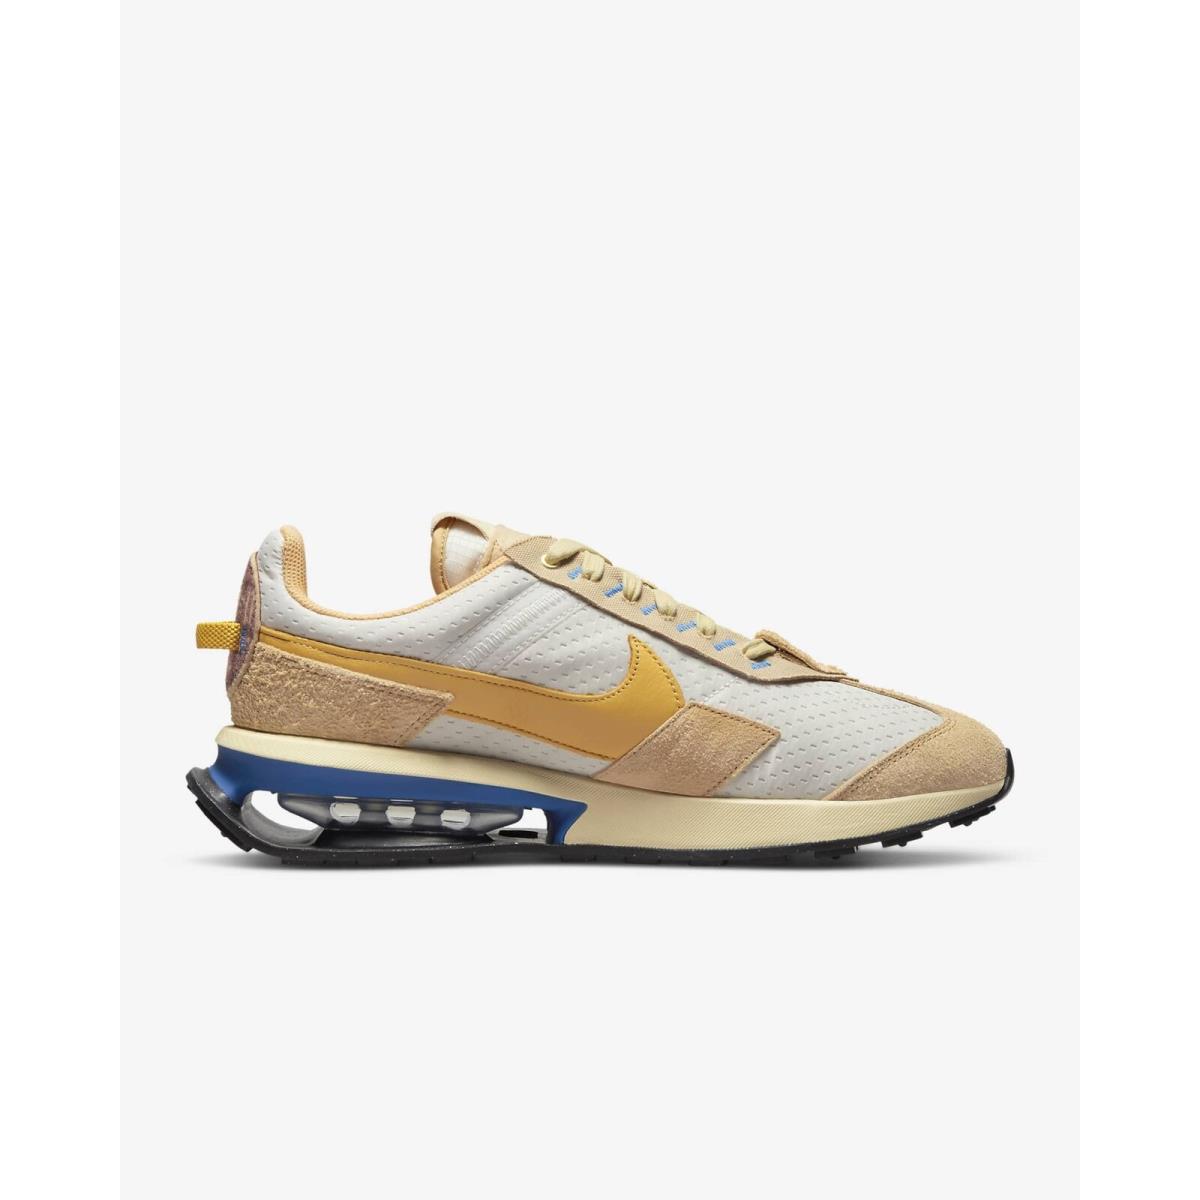 Nike shoes  - Sail/Wheat/Gold/Blue 1